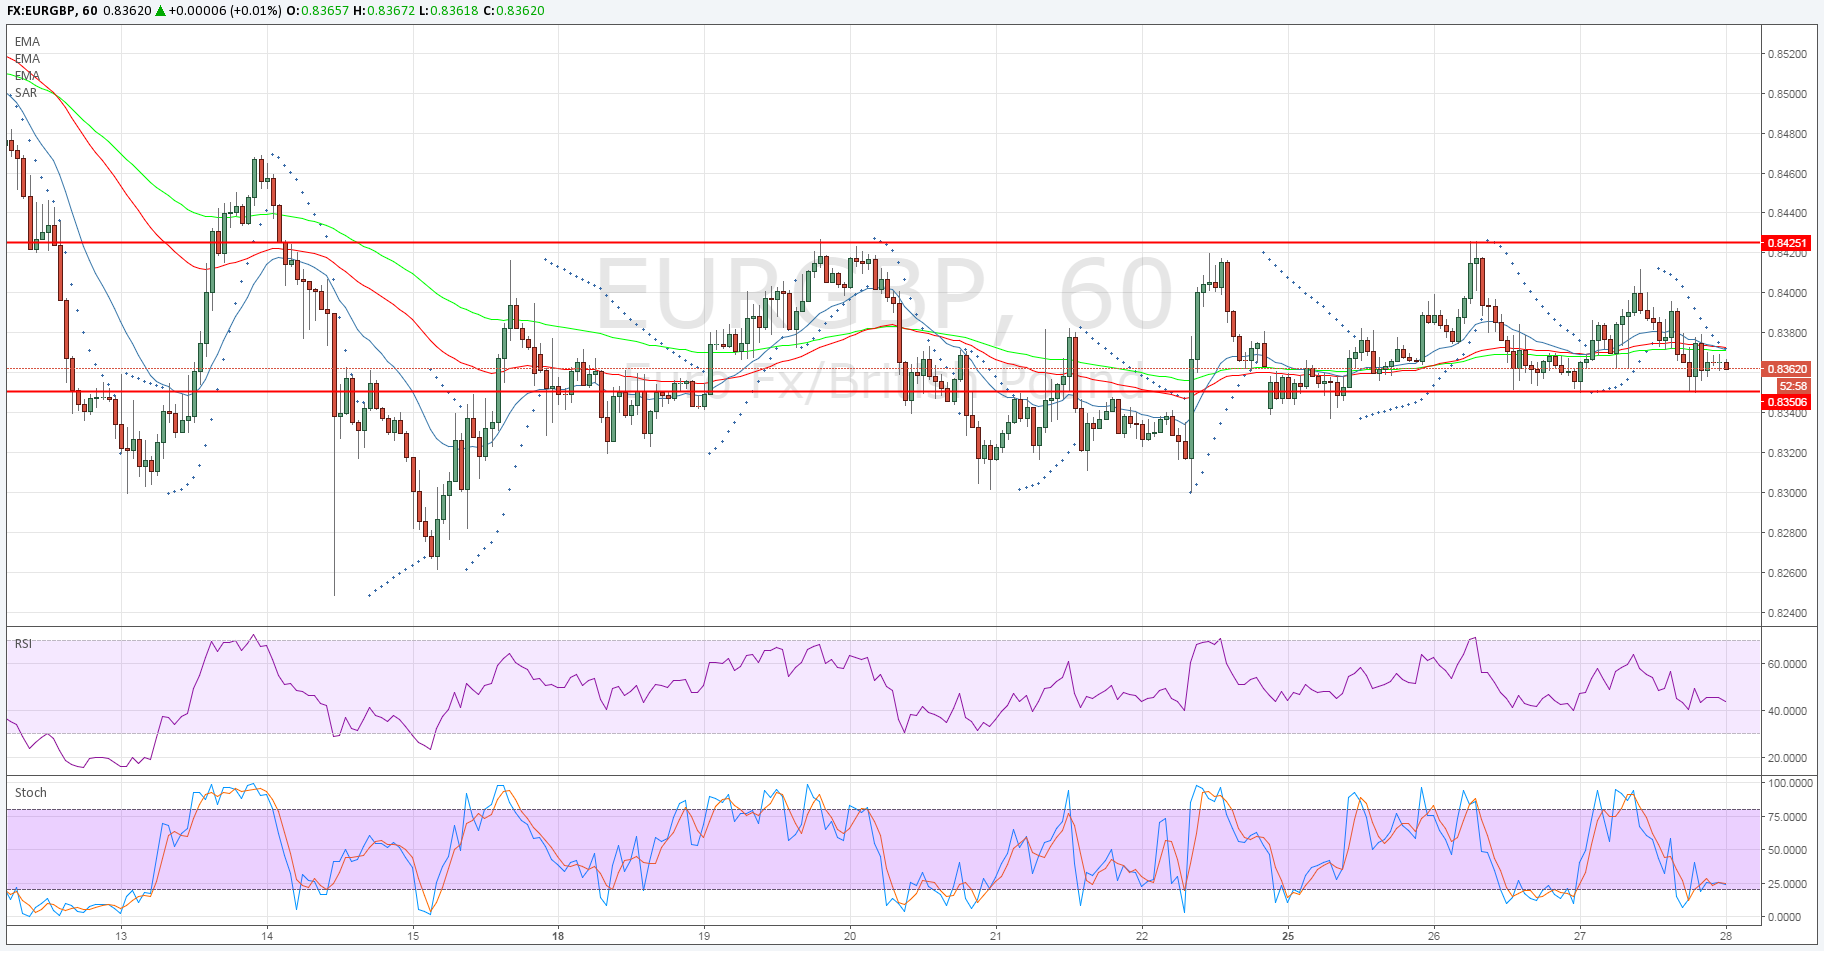 EUR/GBP 60 Min Chart